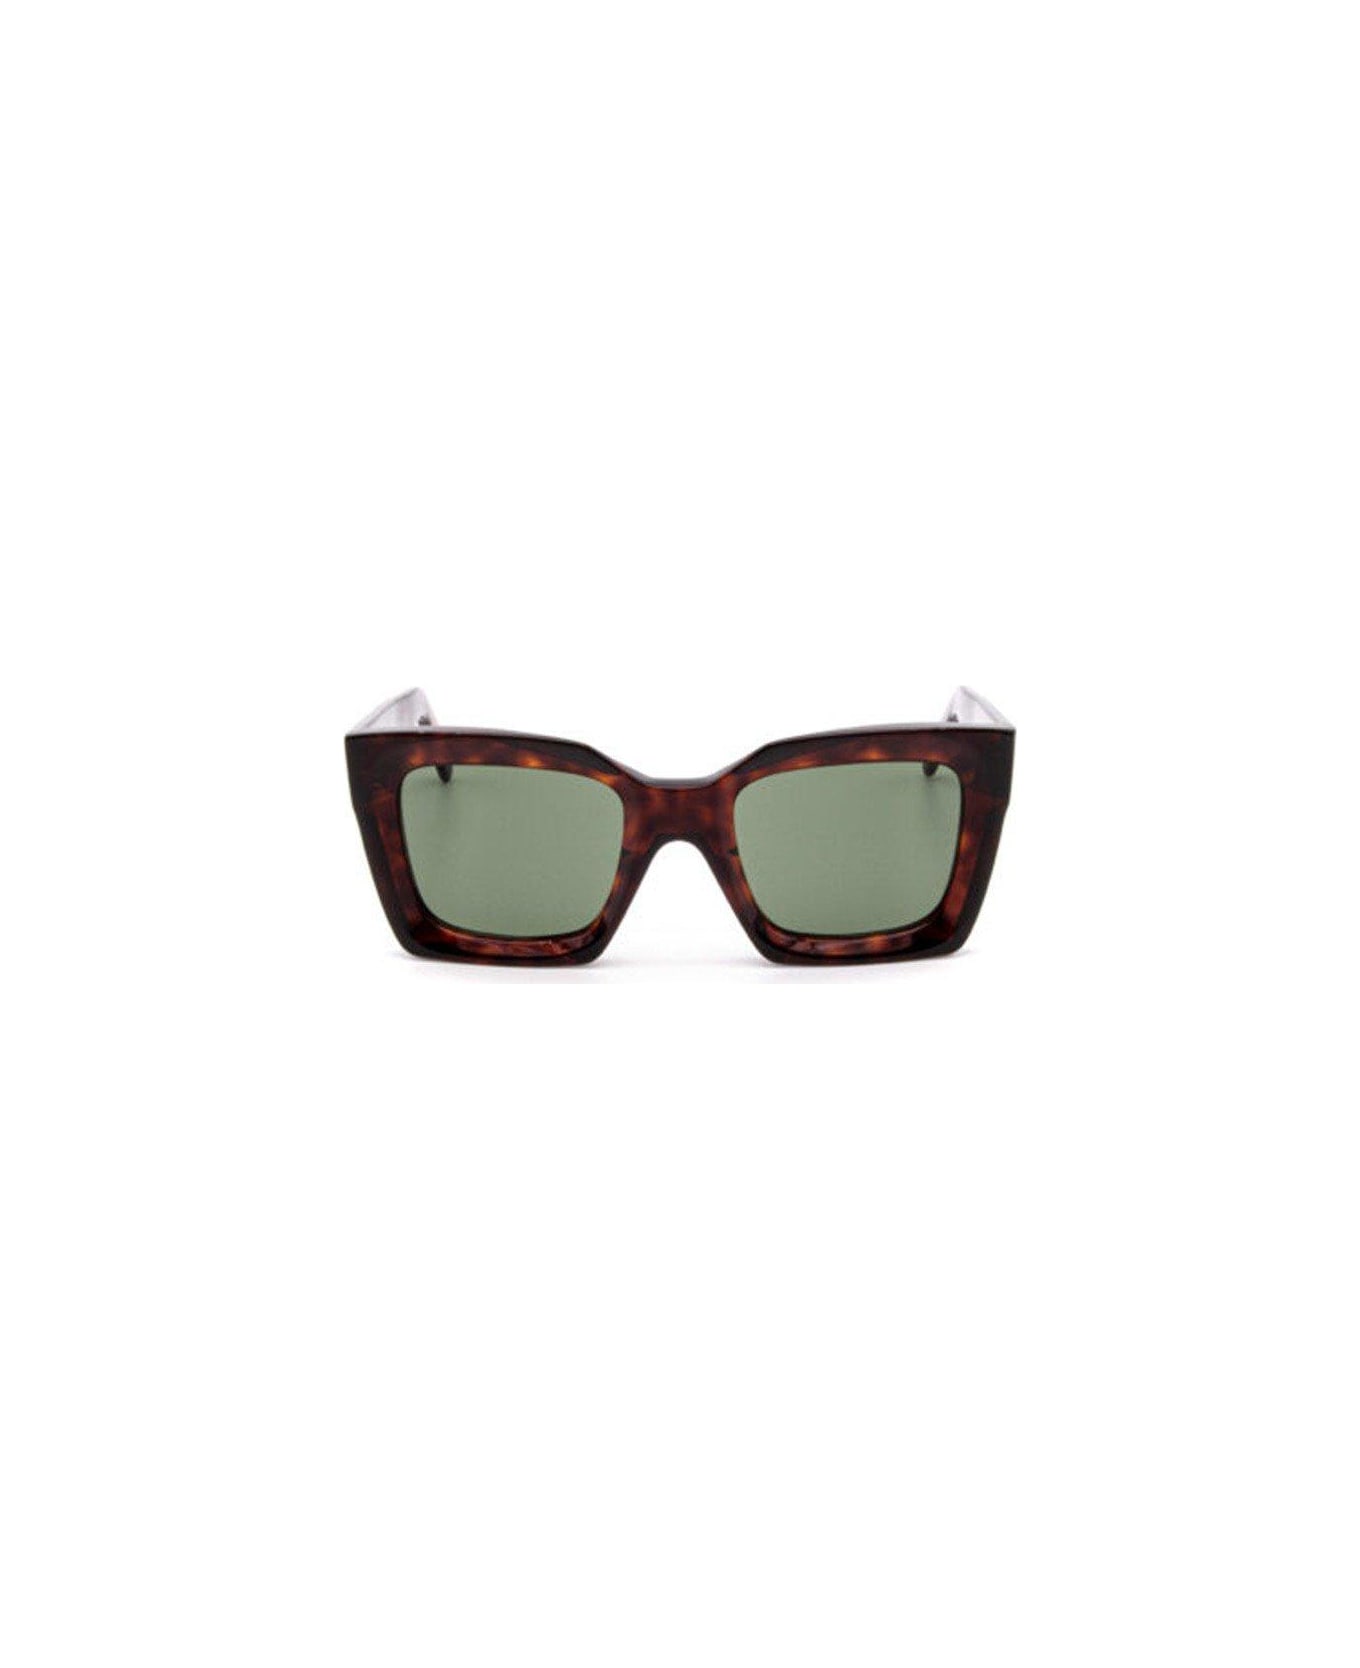 Celine Square Frame Sunglasses - 52n